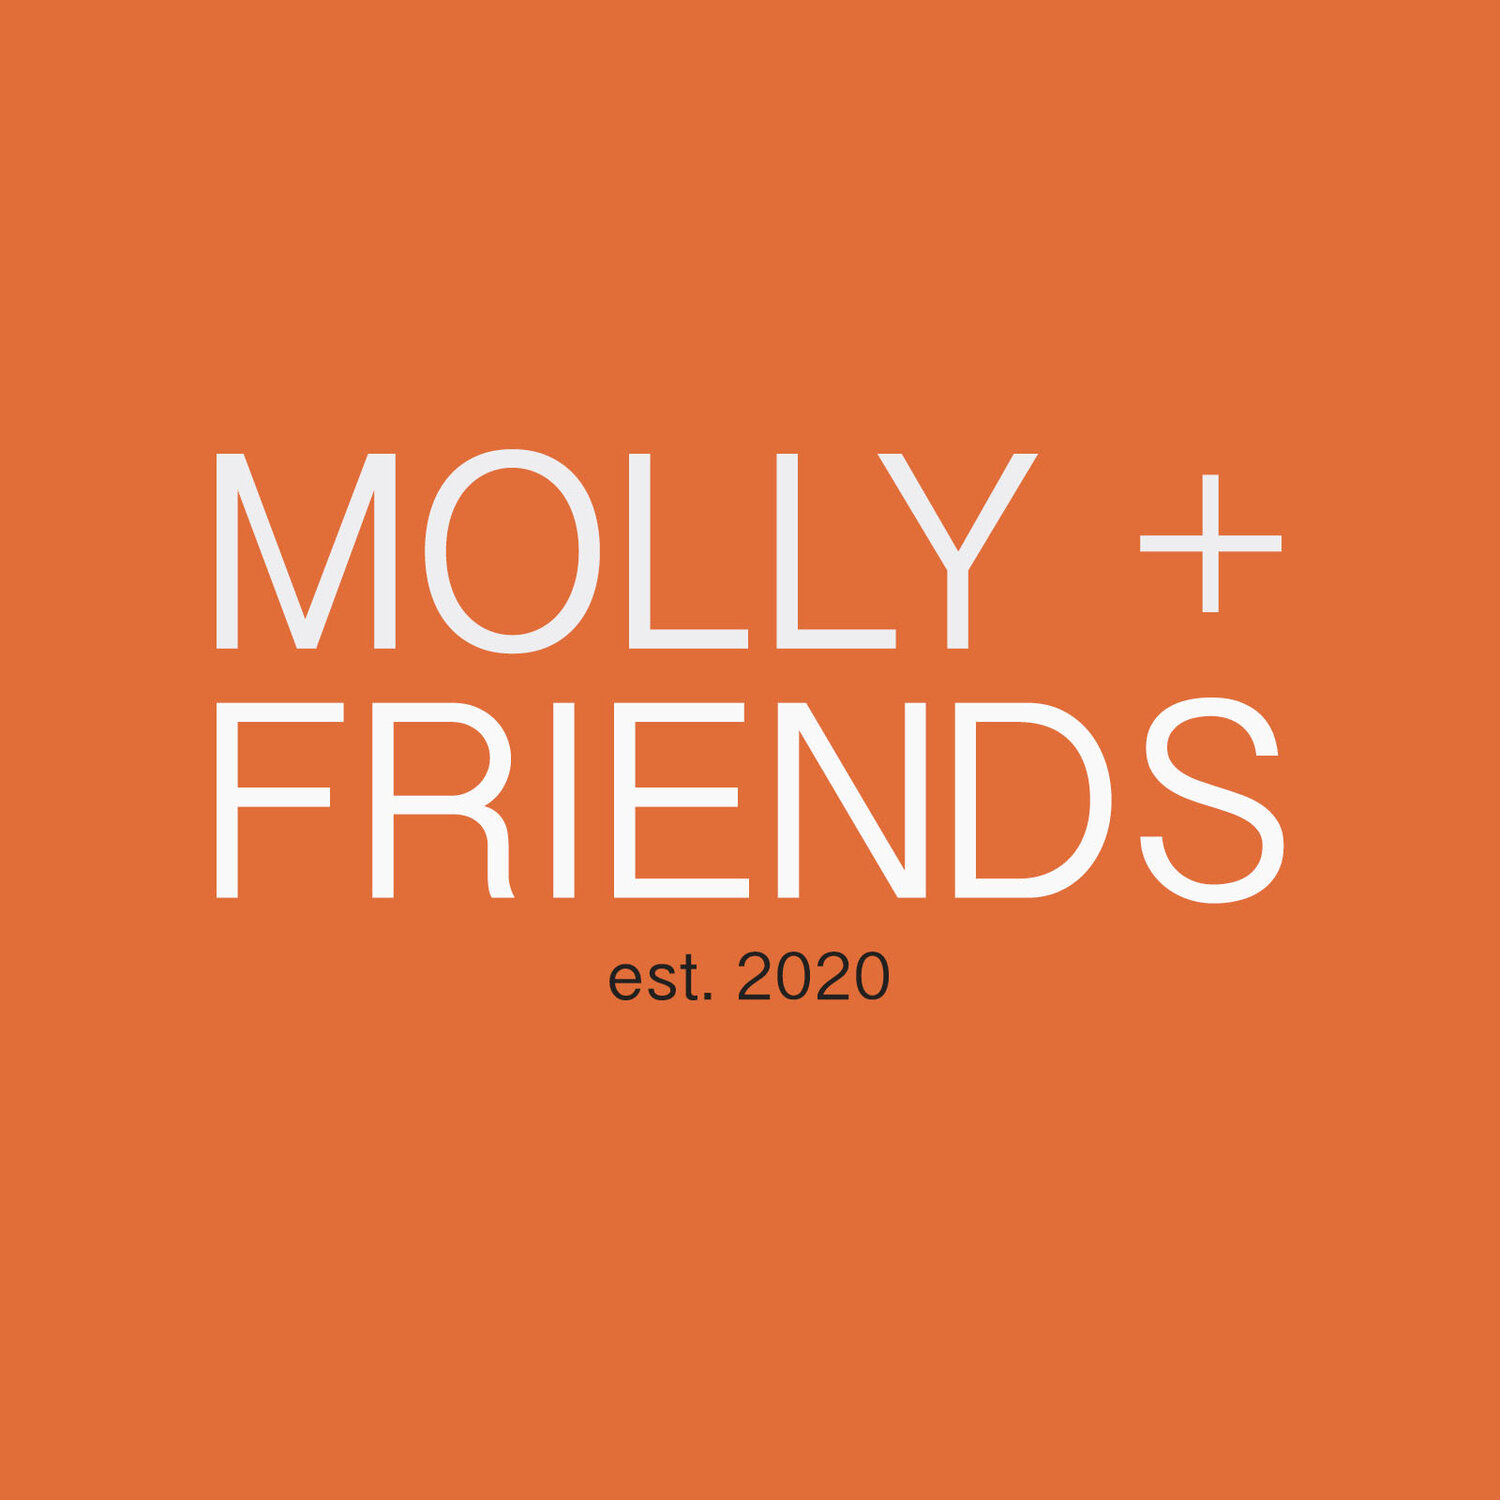 MOLLY+FRIENDS